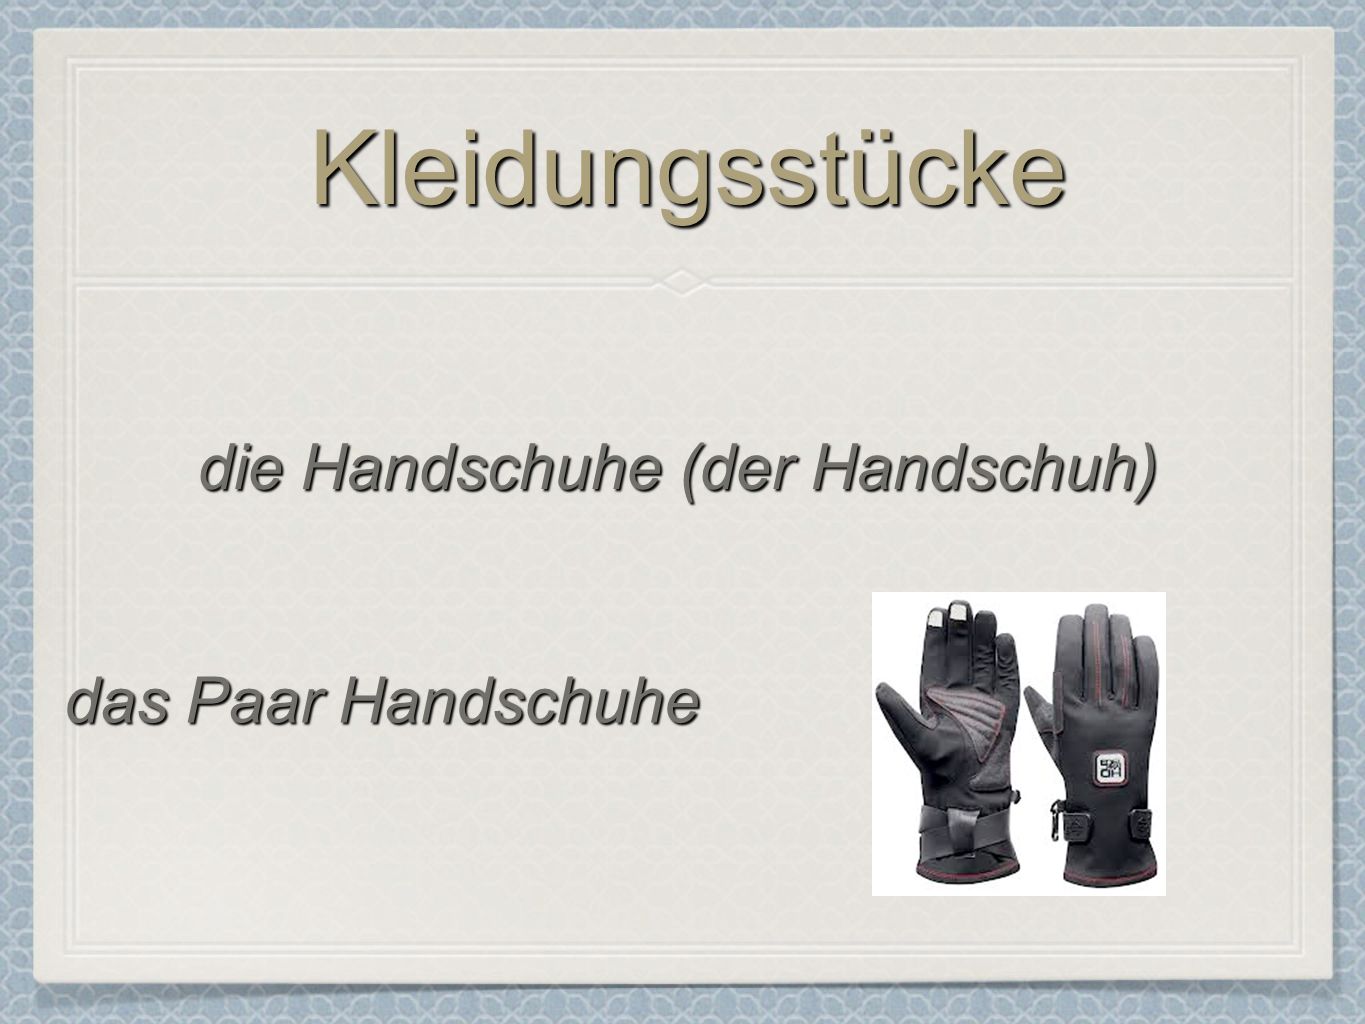 KleidungsstückeKleidungsstücke die Handschuhe (der Handschuh) das Paar Handschuhe